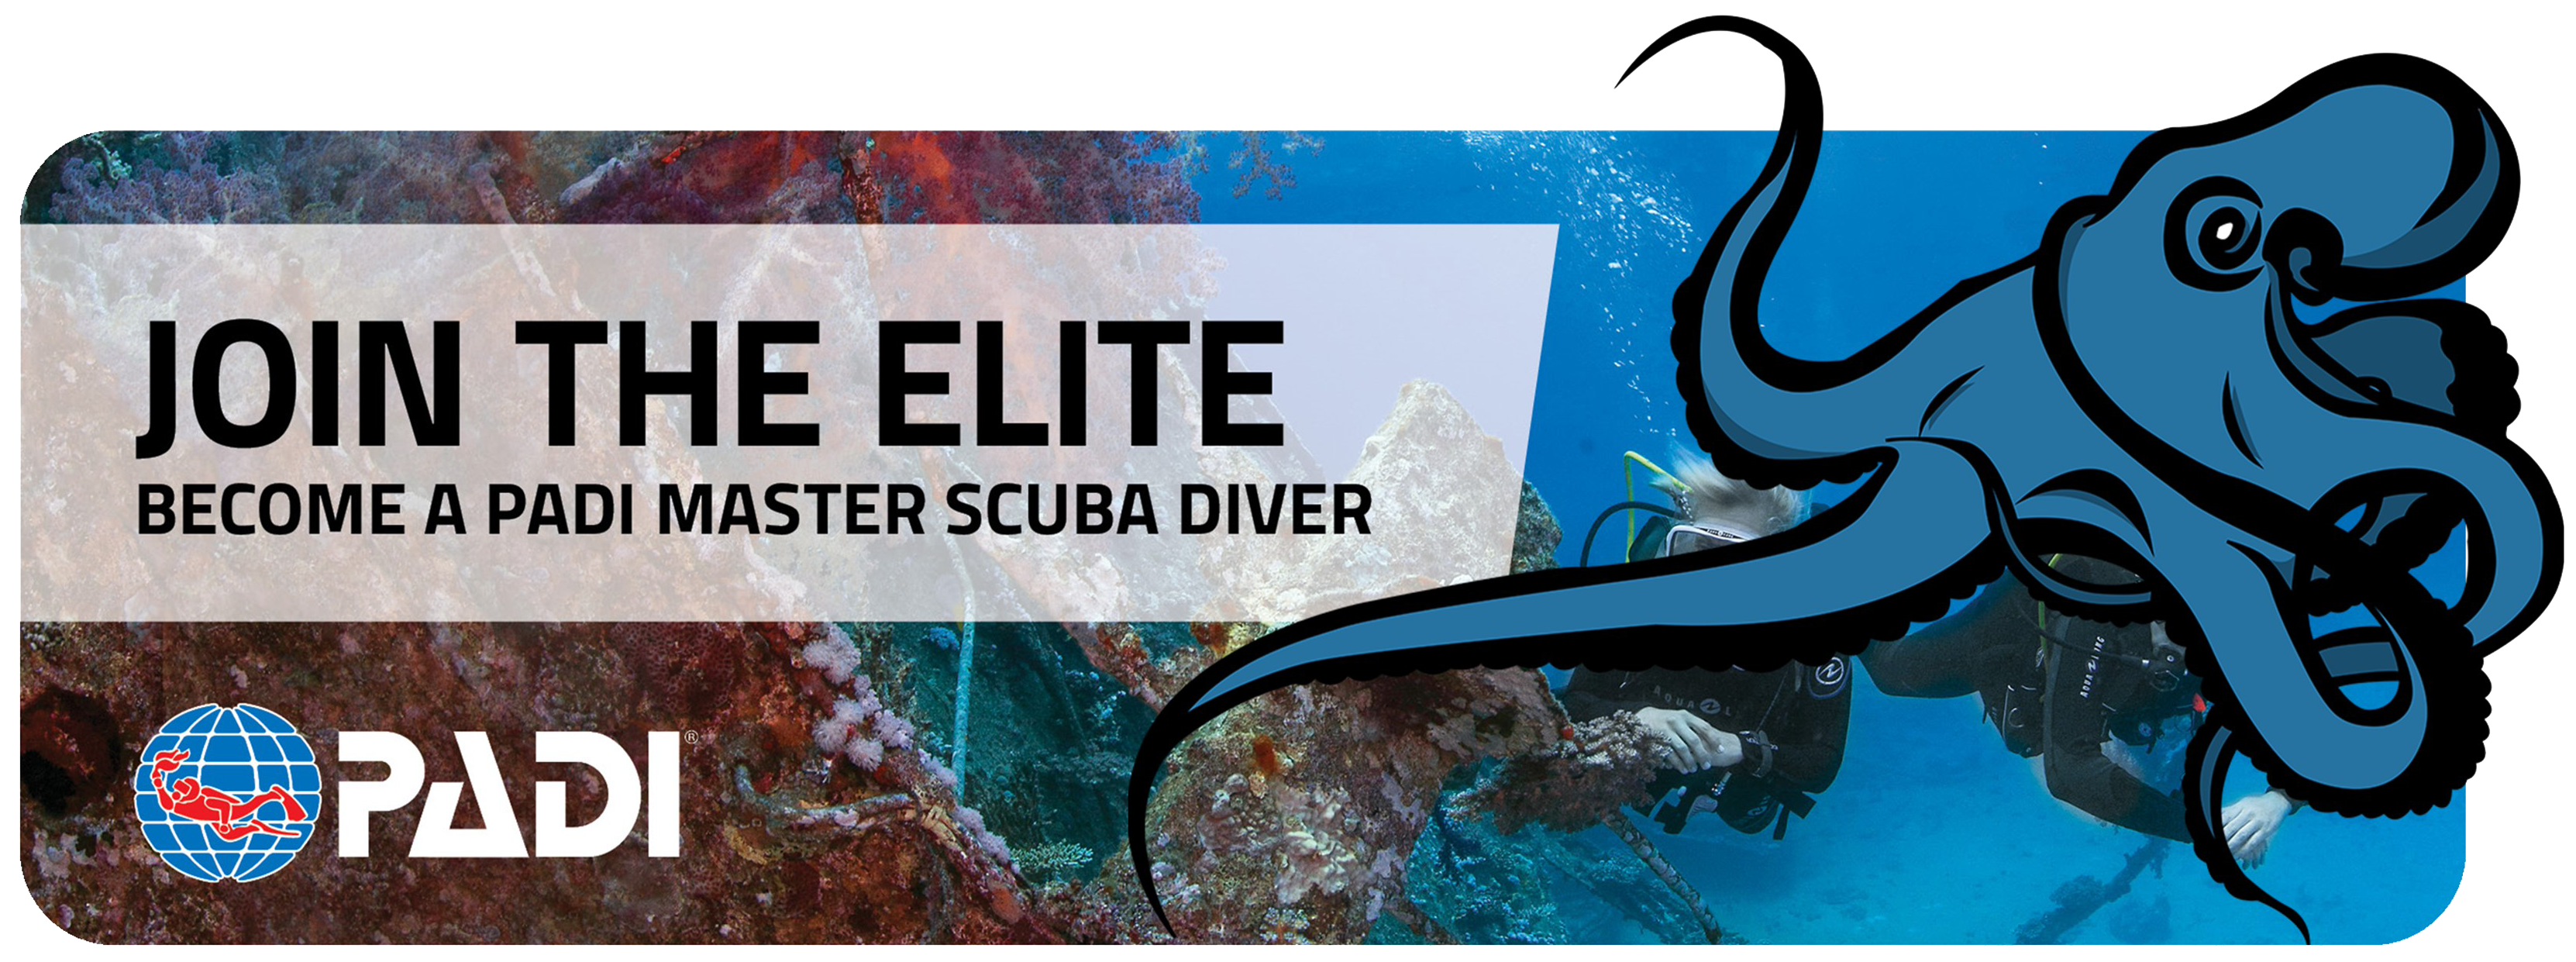 Master SCUBA Diver